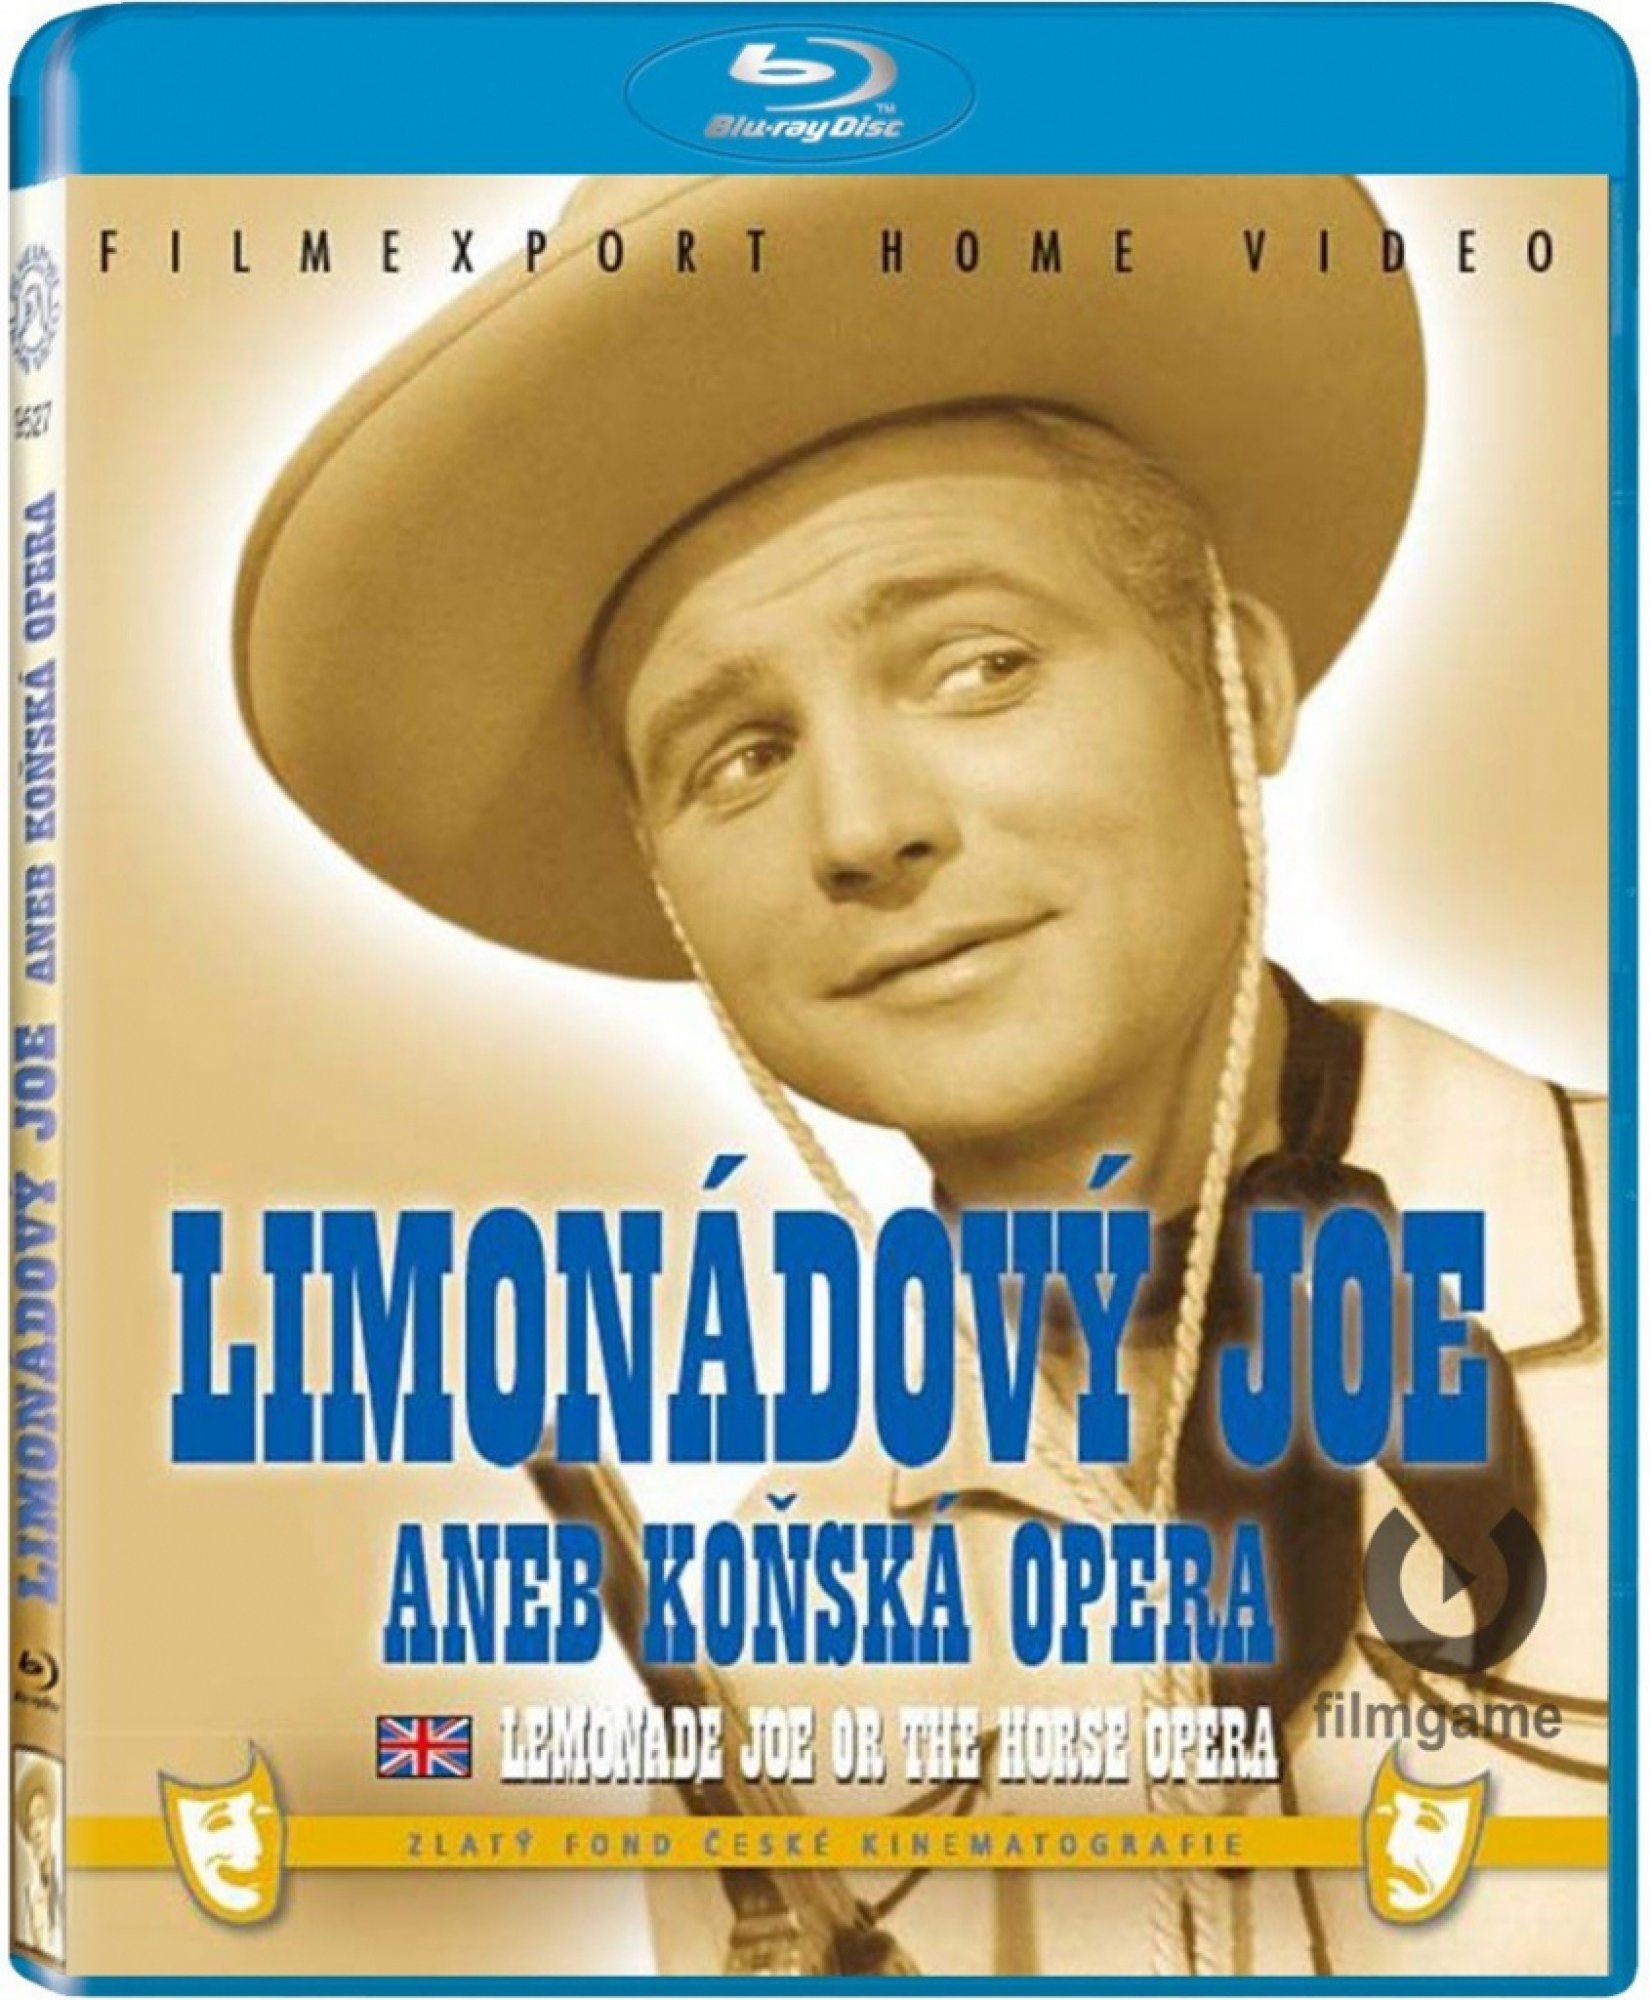 Stiahni si Filmy CZ/SK dabing Limonadovy Joe aneb Konska opera / Lemonade Joe (1964) BDRip.CZ.EN.1080p = CSFD 86%